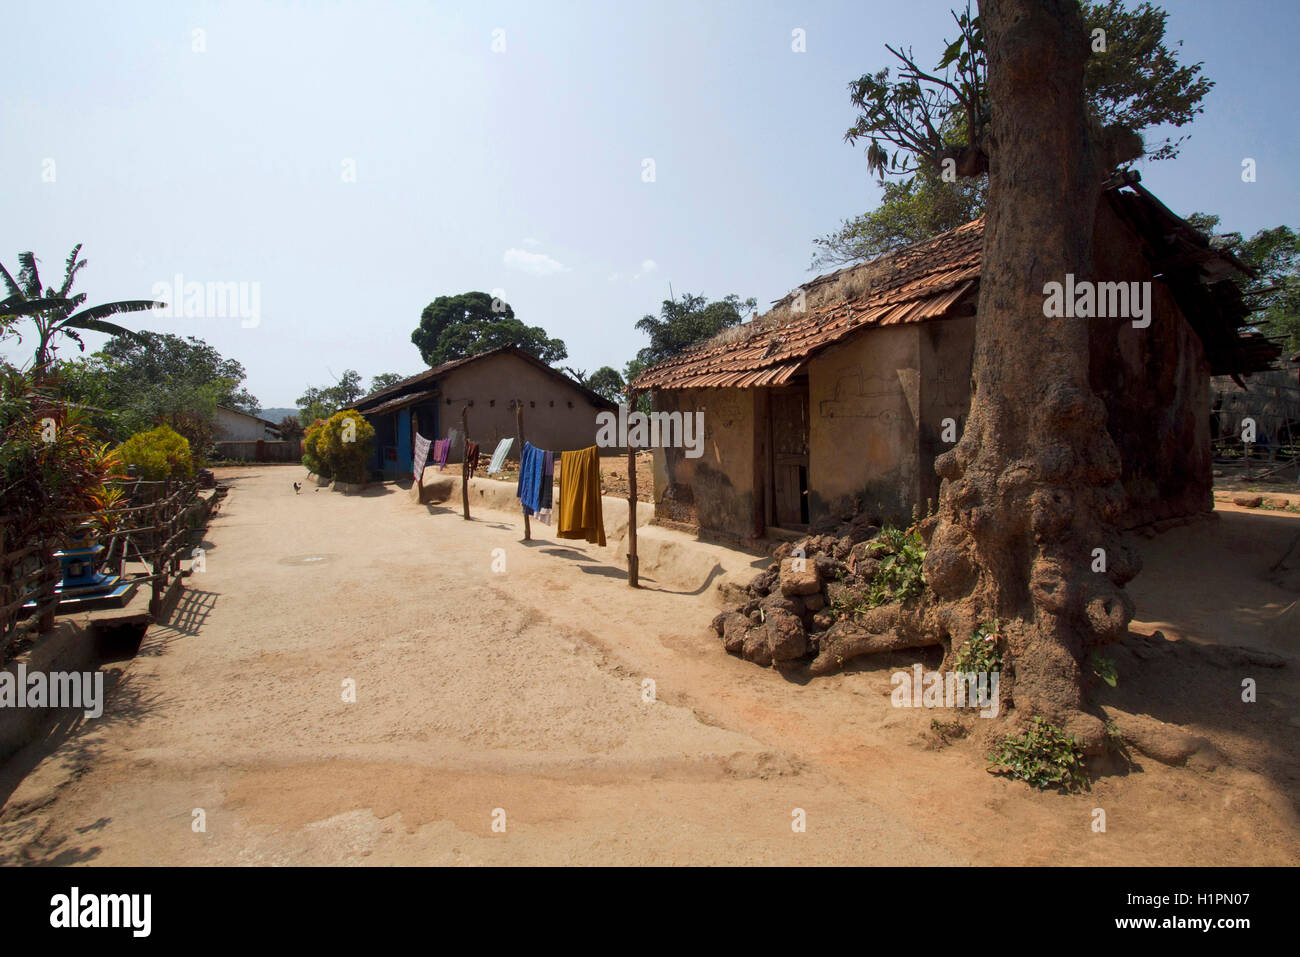 Village street, Kuveshi village, Kali tiger reserve, India Stock Photo